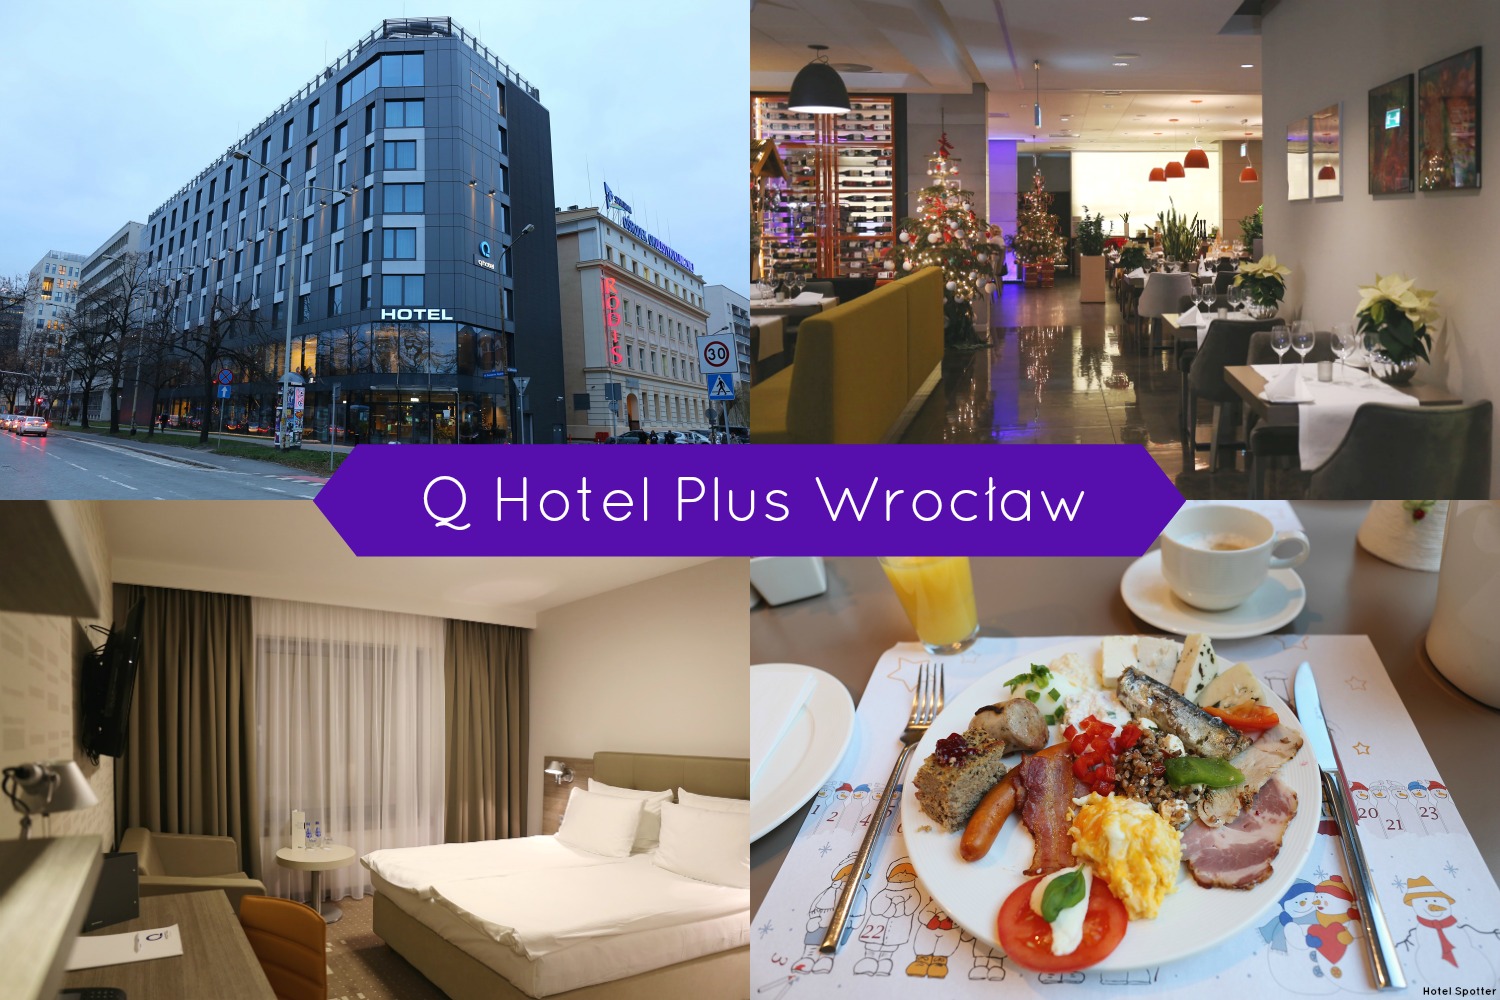 Q Hotel Plus Wrocław Best Western Premier Collection - recenzja